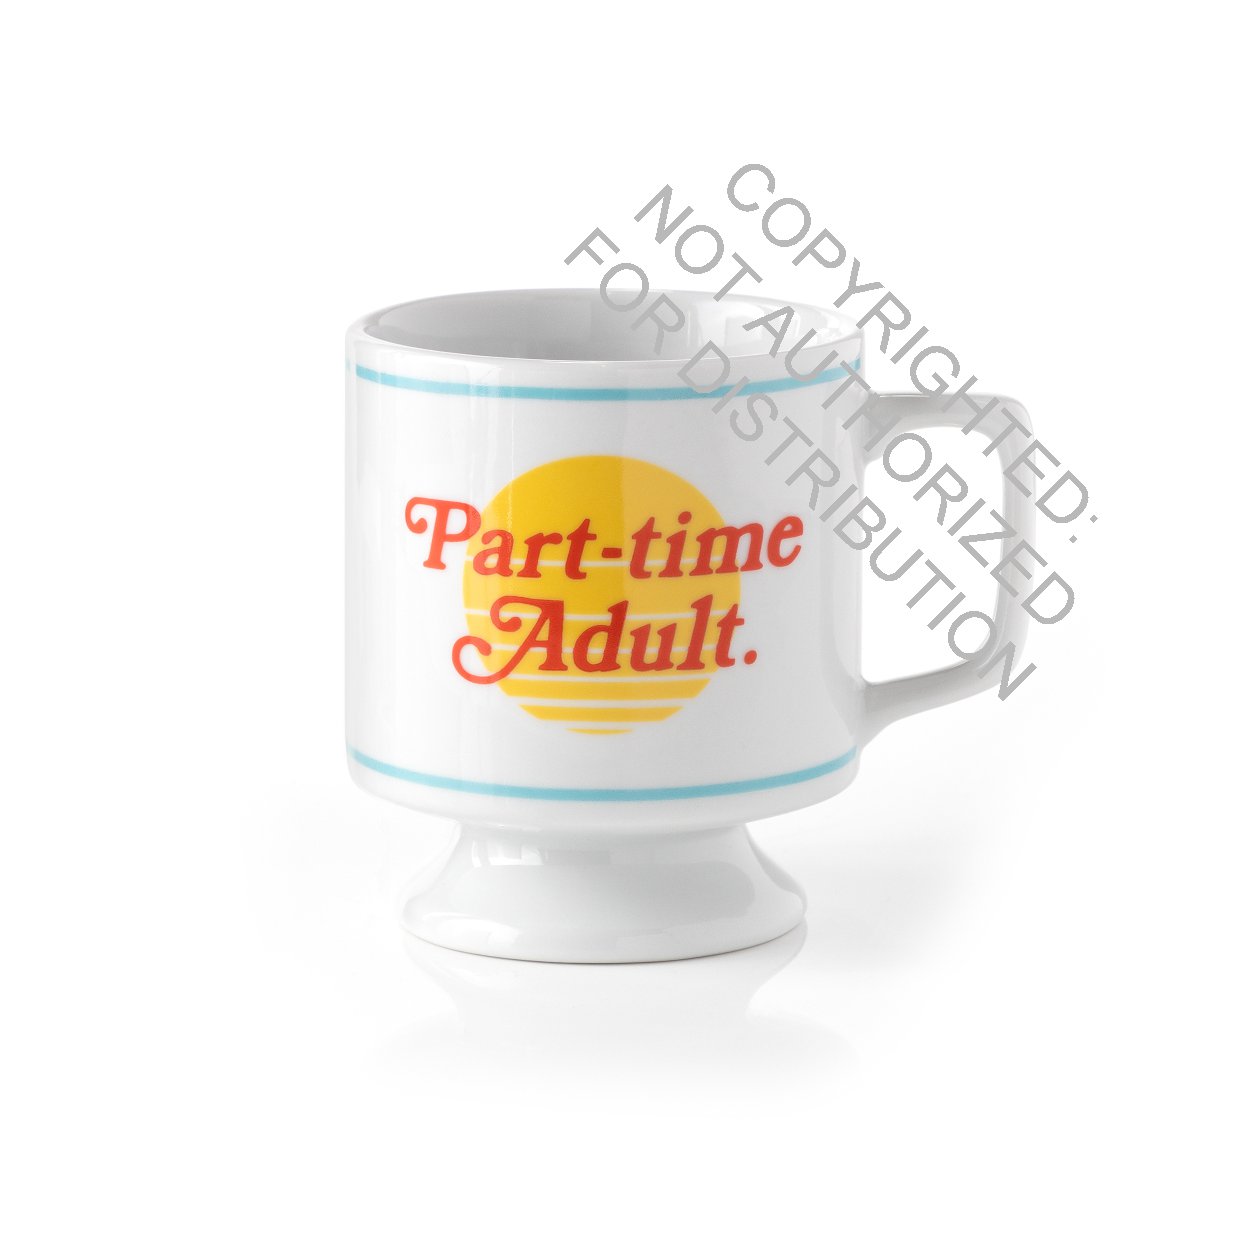 Part-time Adult Ceramic Mug